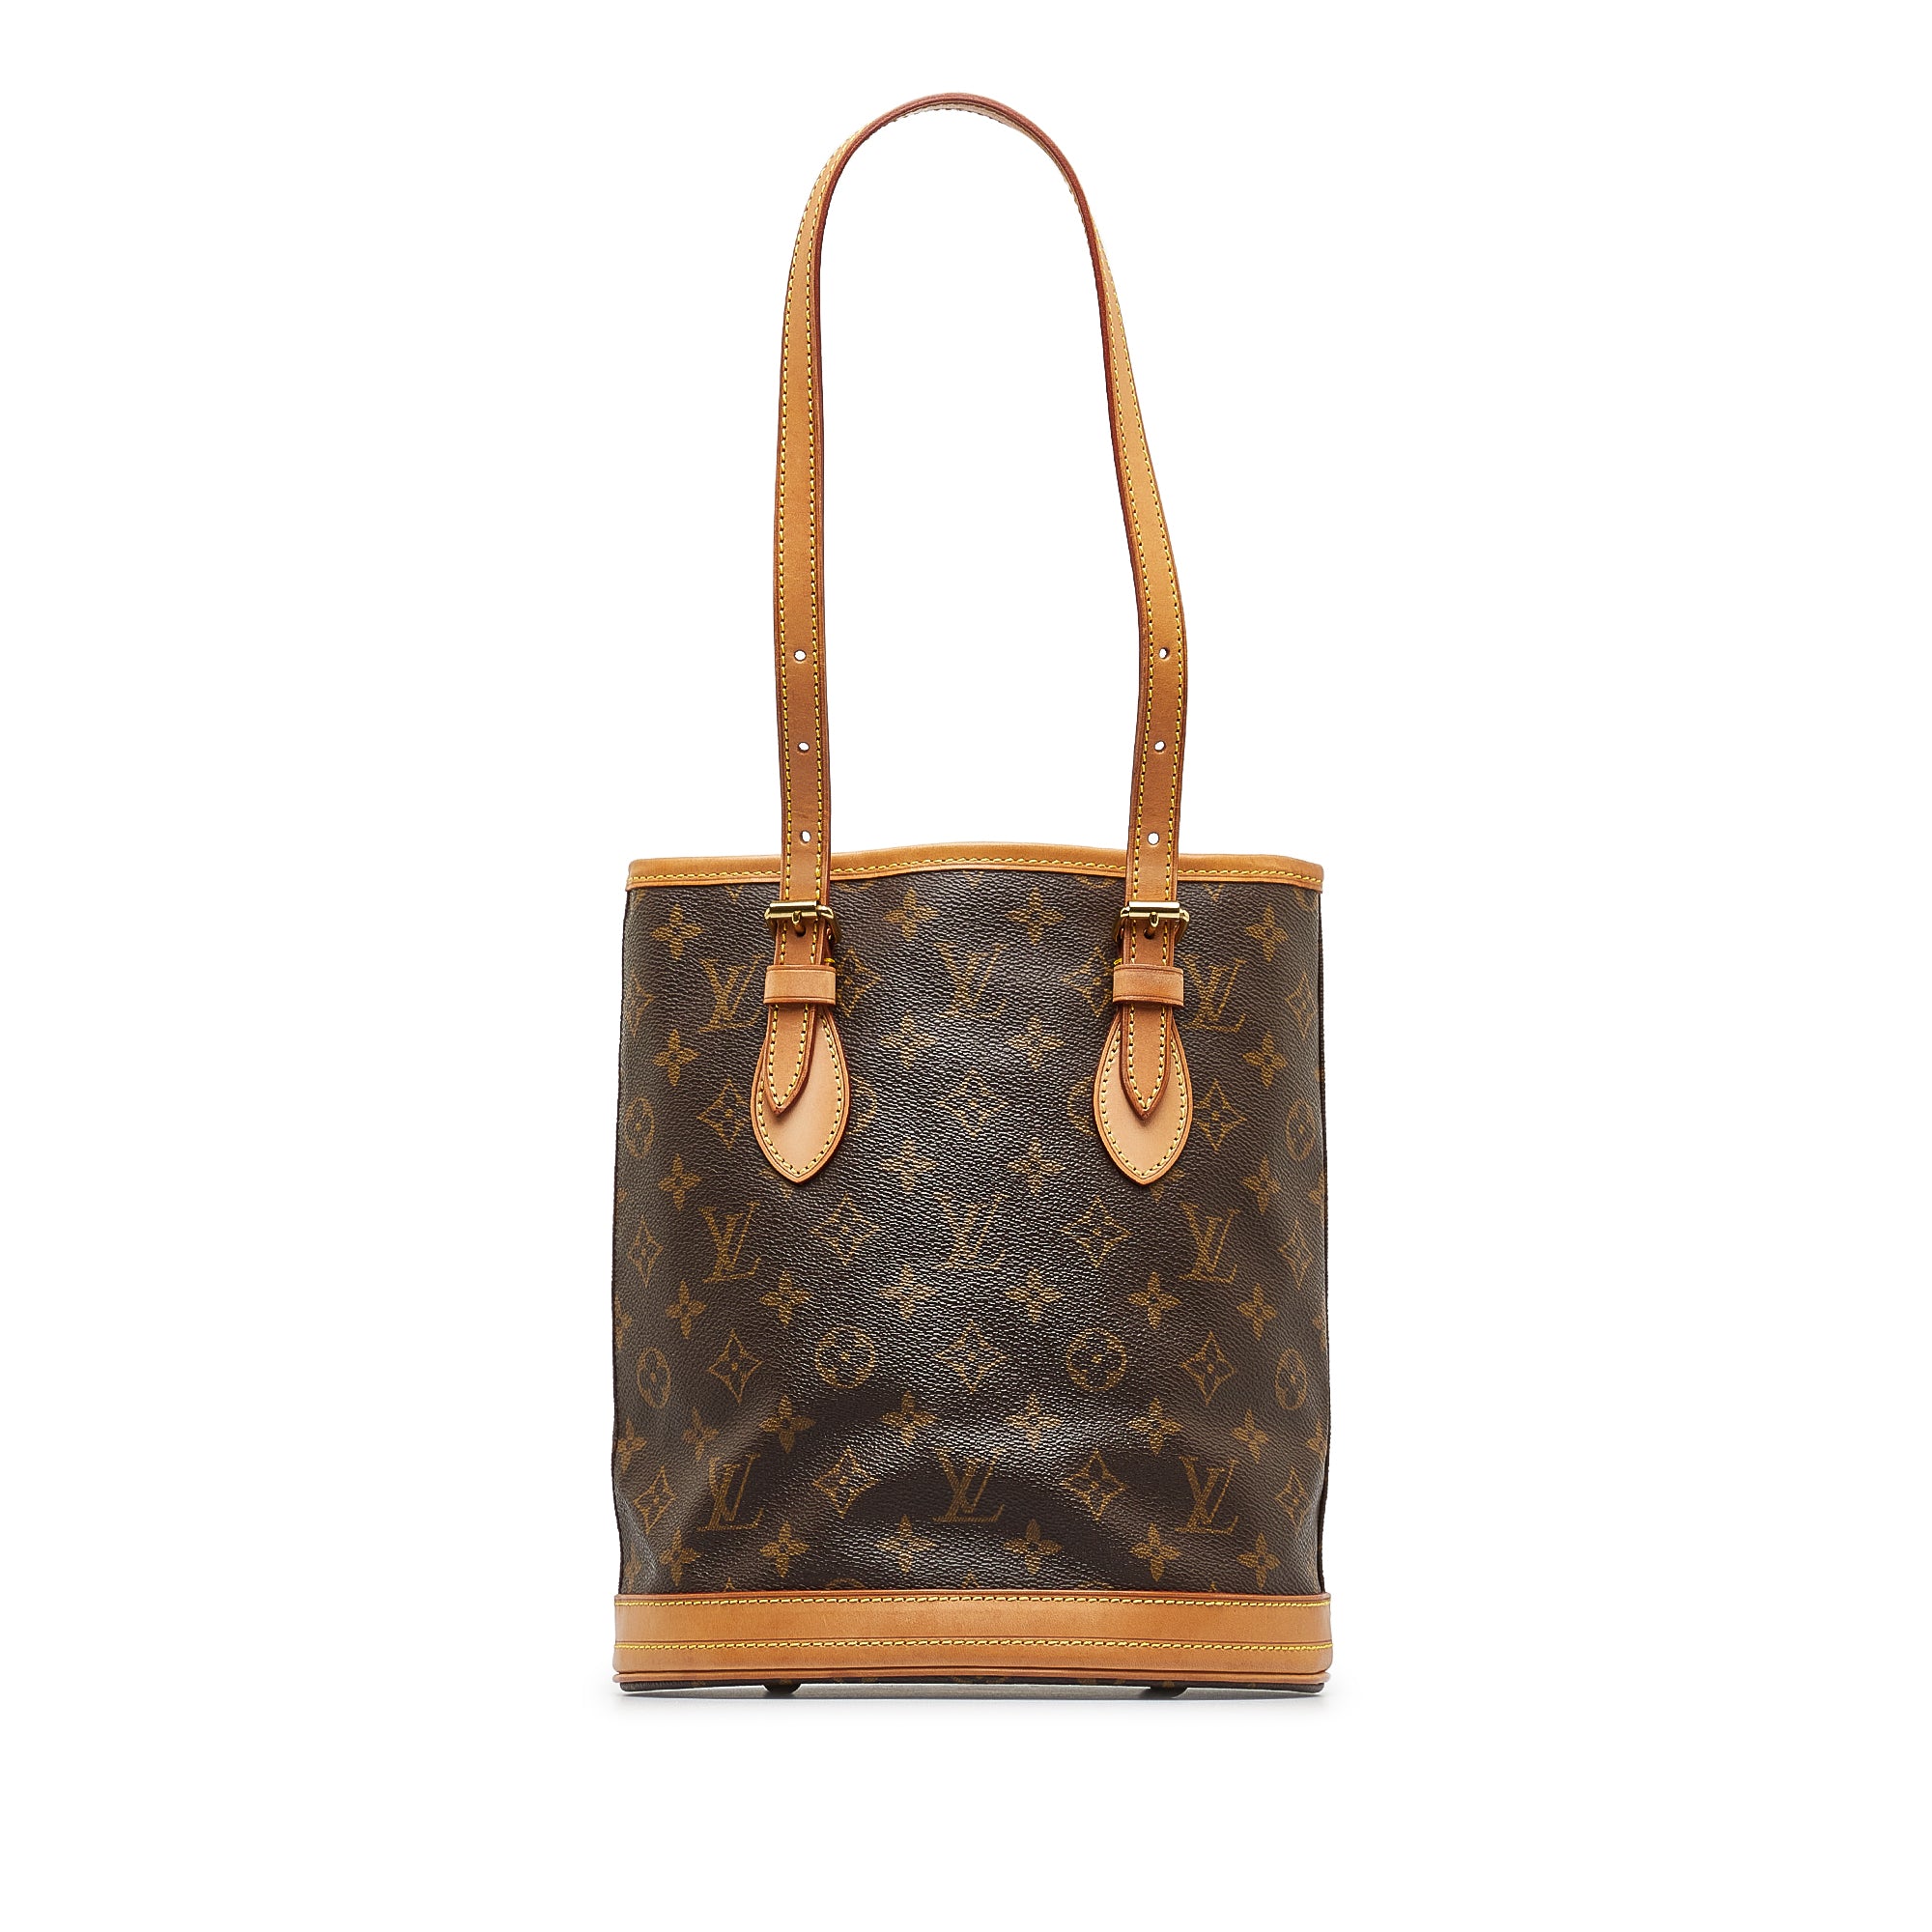 Louis Vuitton Monogram Canvas Bag Price